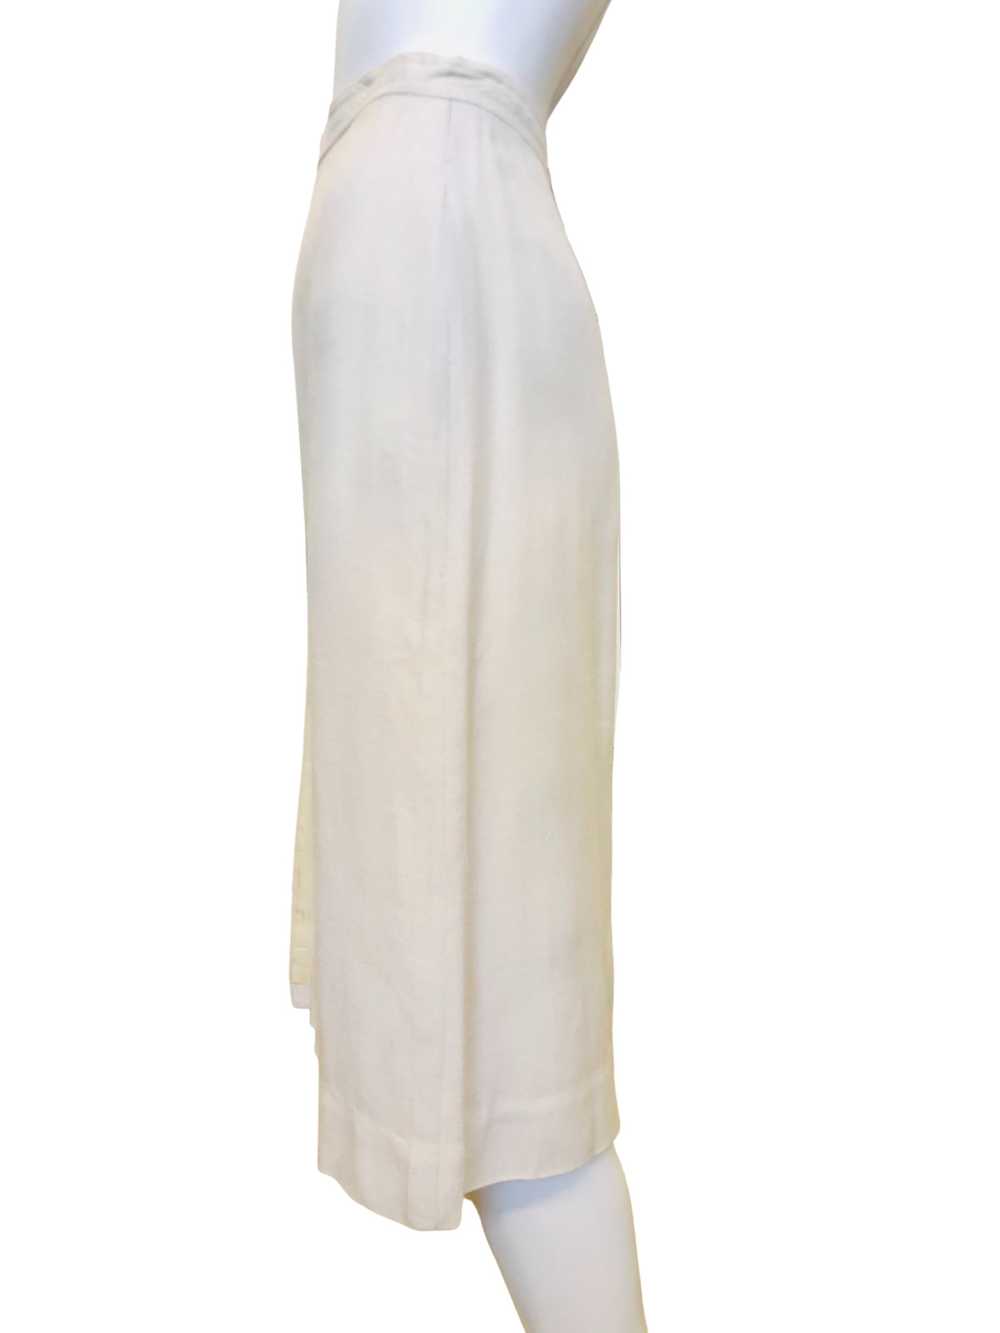 1980's Ivory Pencil Skirt w/Side Slit - image 2